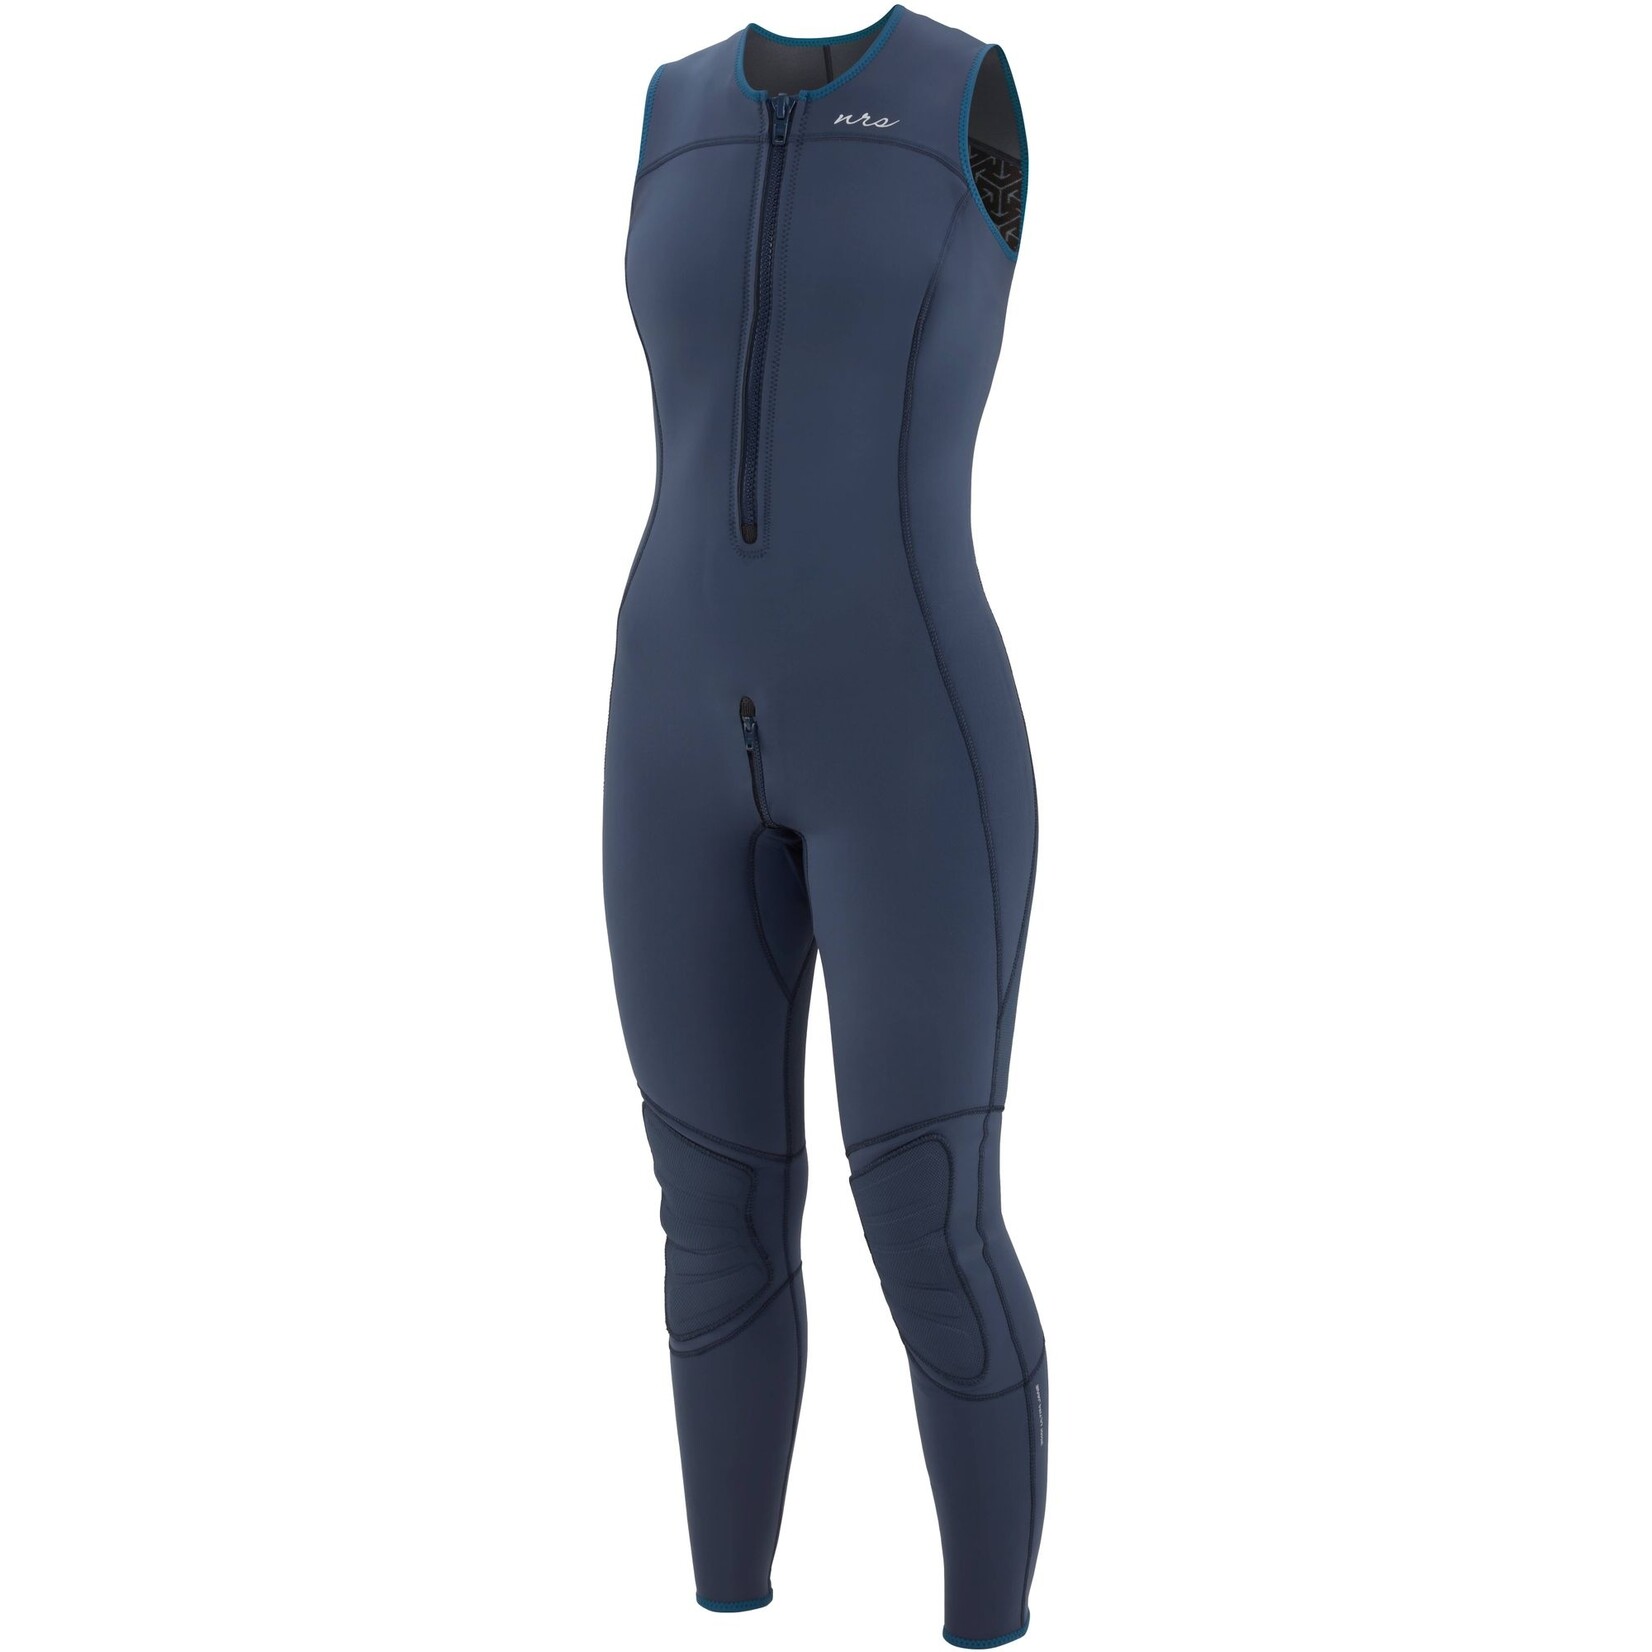 NRS - Women's 3.0 Ultra Jane Wetsuit